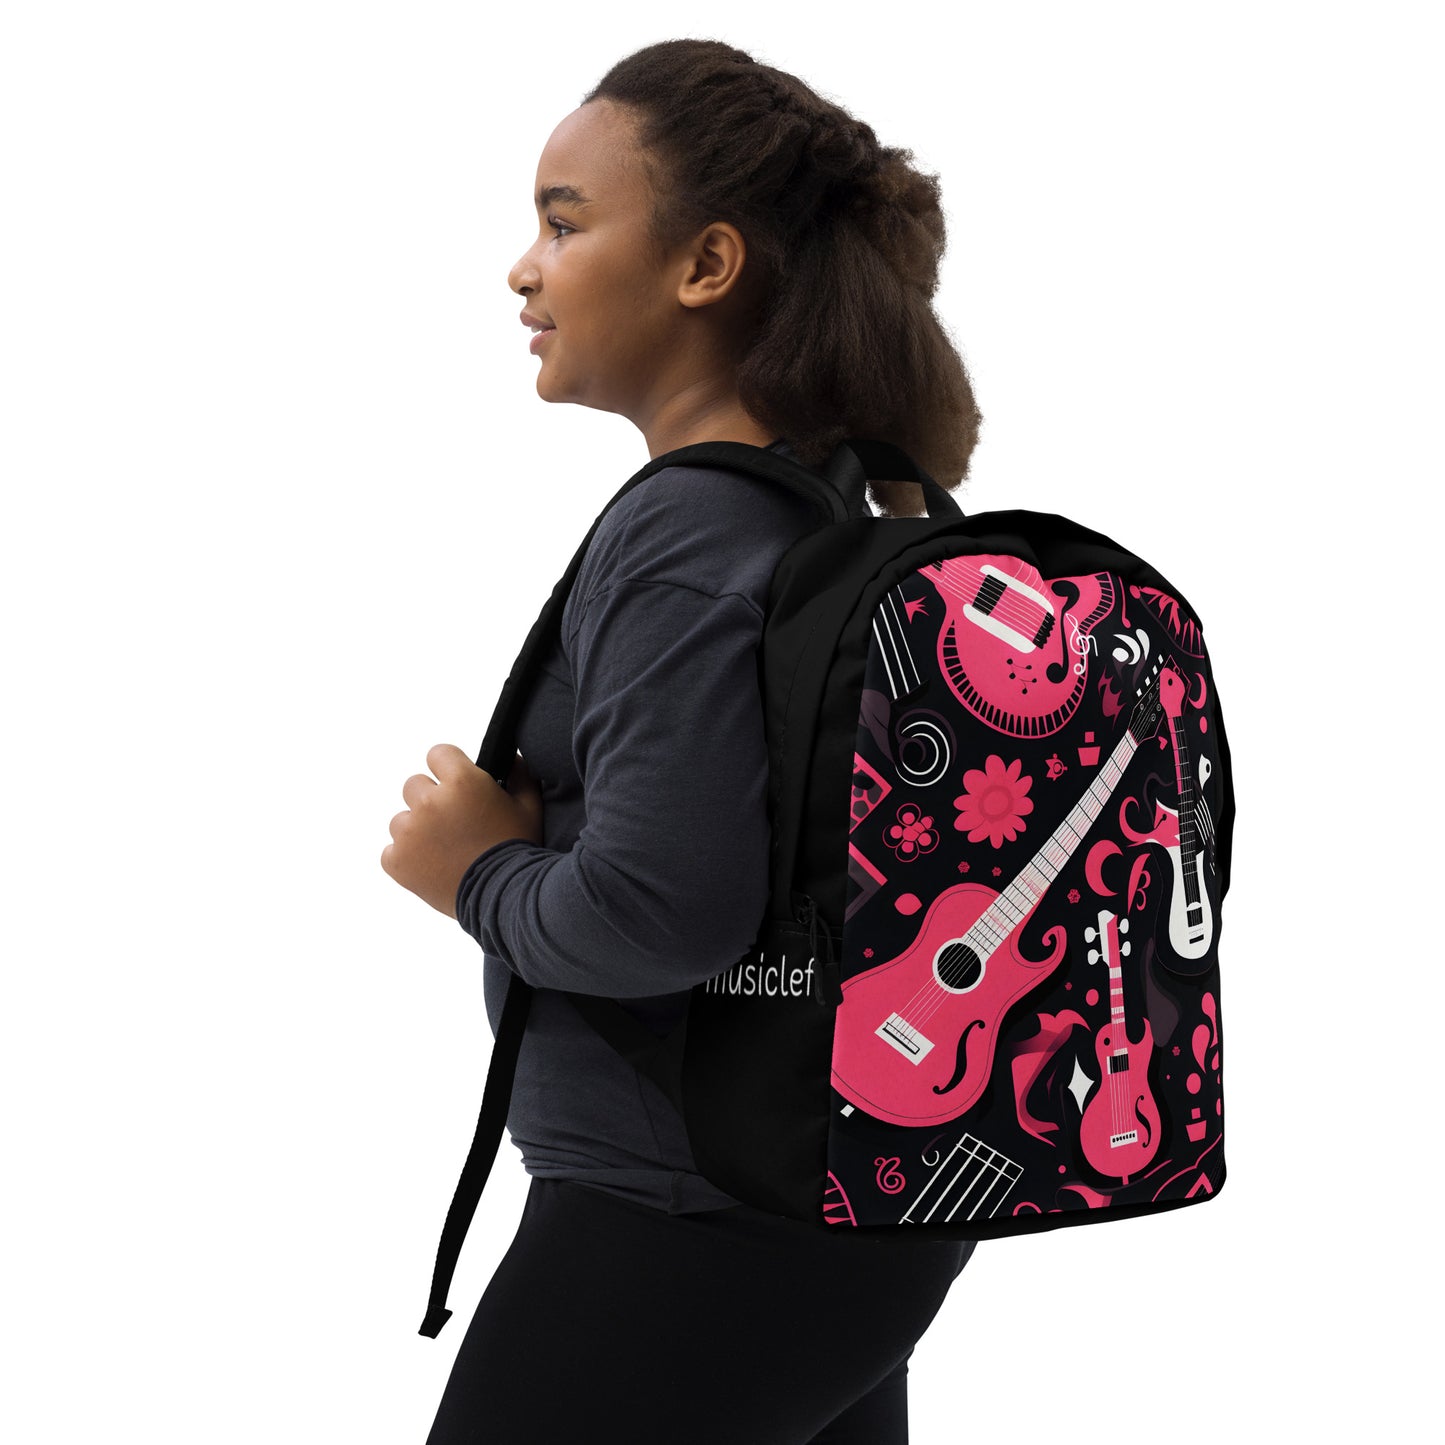 Backpack Pink 1